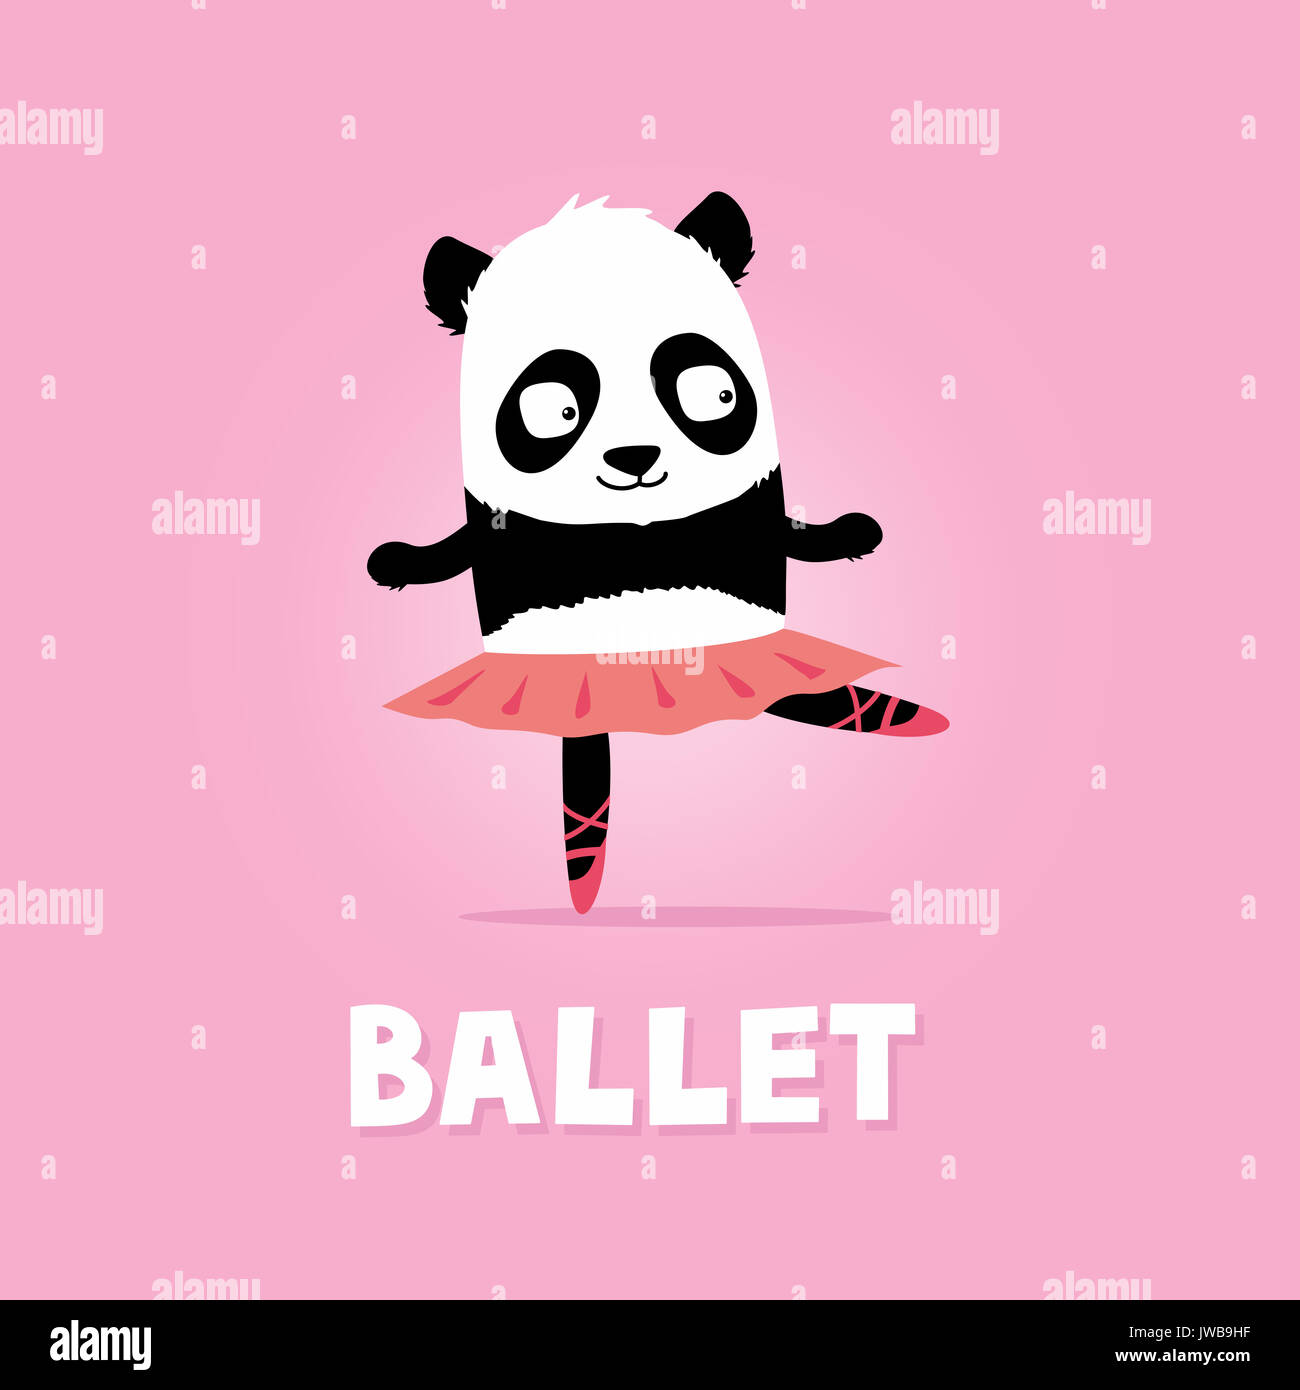 Ballerine panda. Cute cartoon illustration sur fond rose Banque D'Images